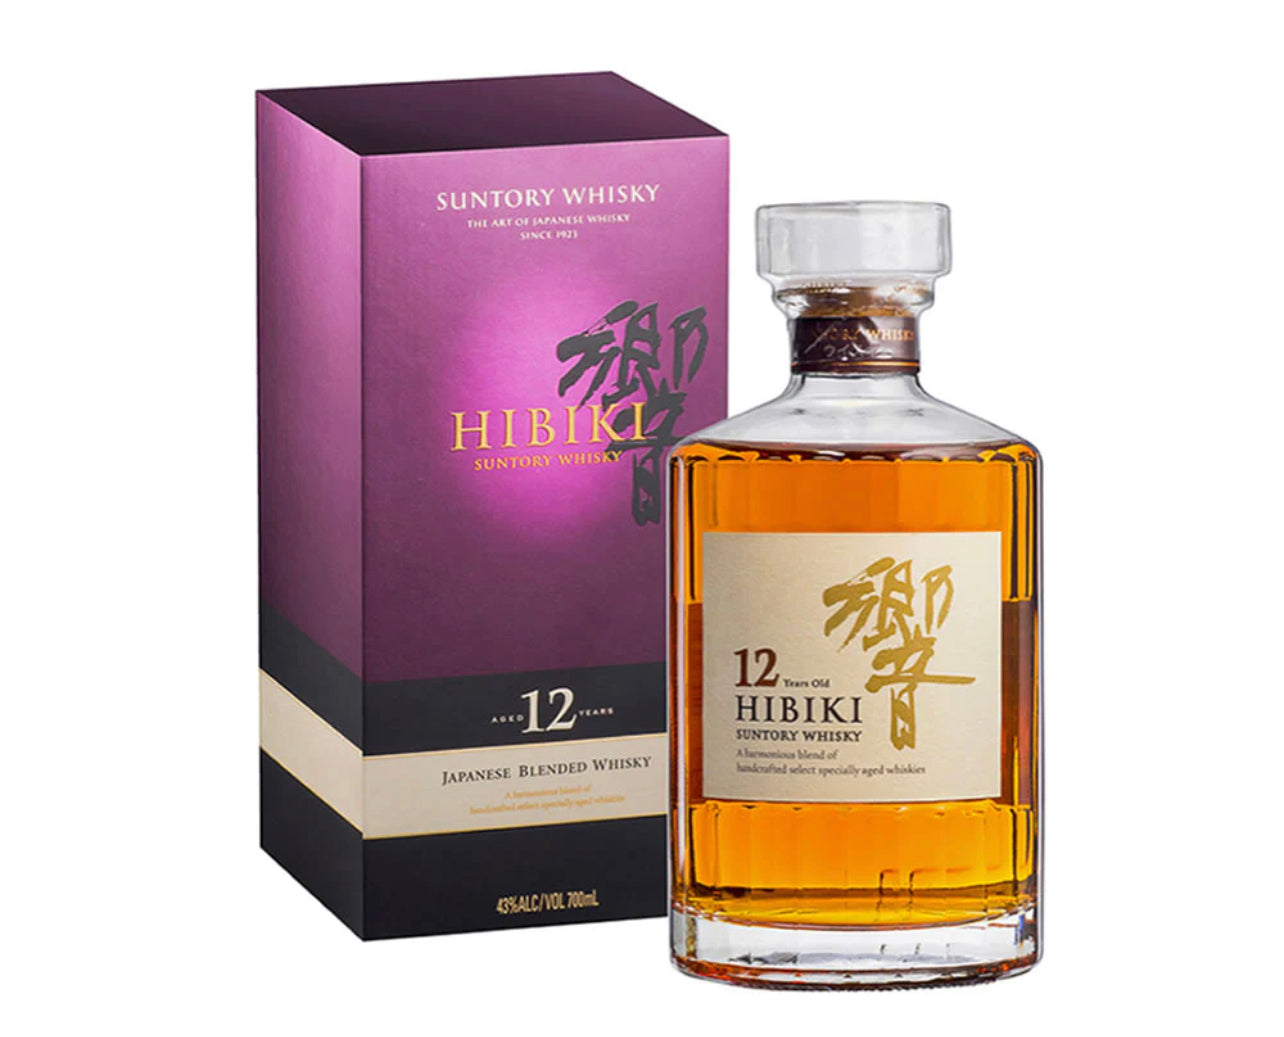 Buy Hibiki 21 Year Old Online  Rare Whiskey Shop – The Rare Whiskey Shop